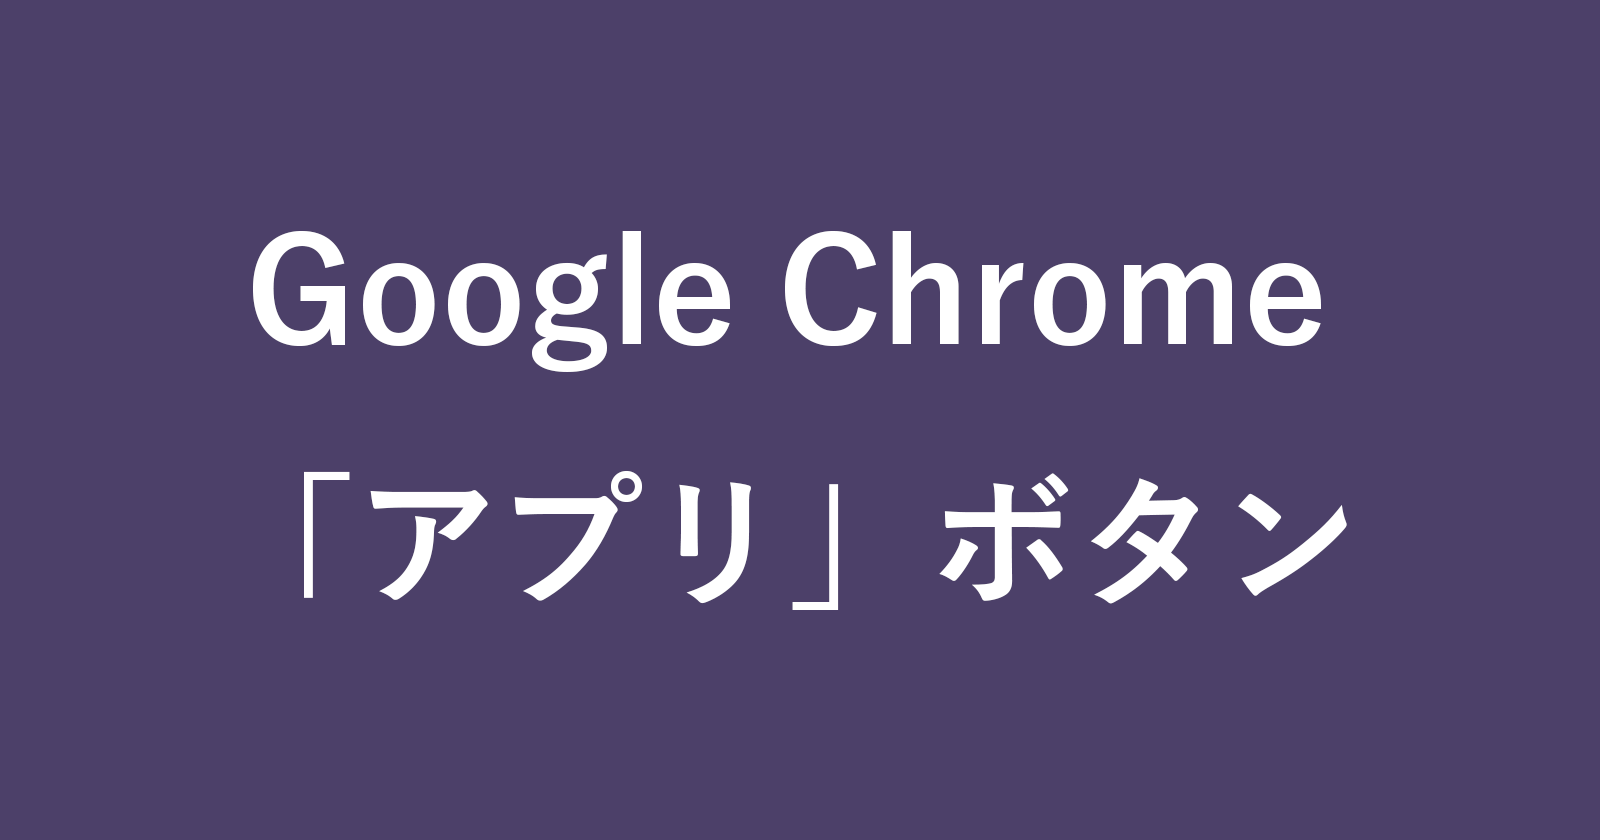 google chrome apps button